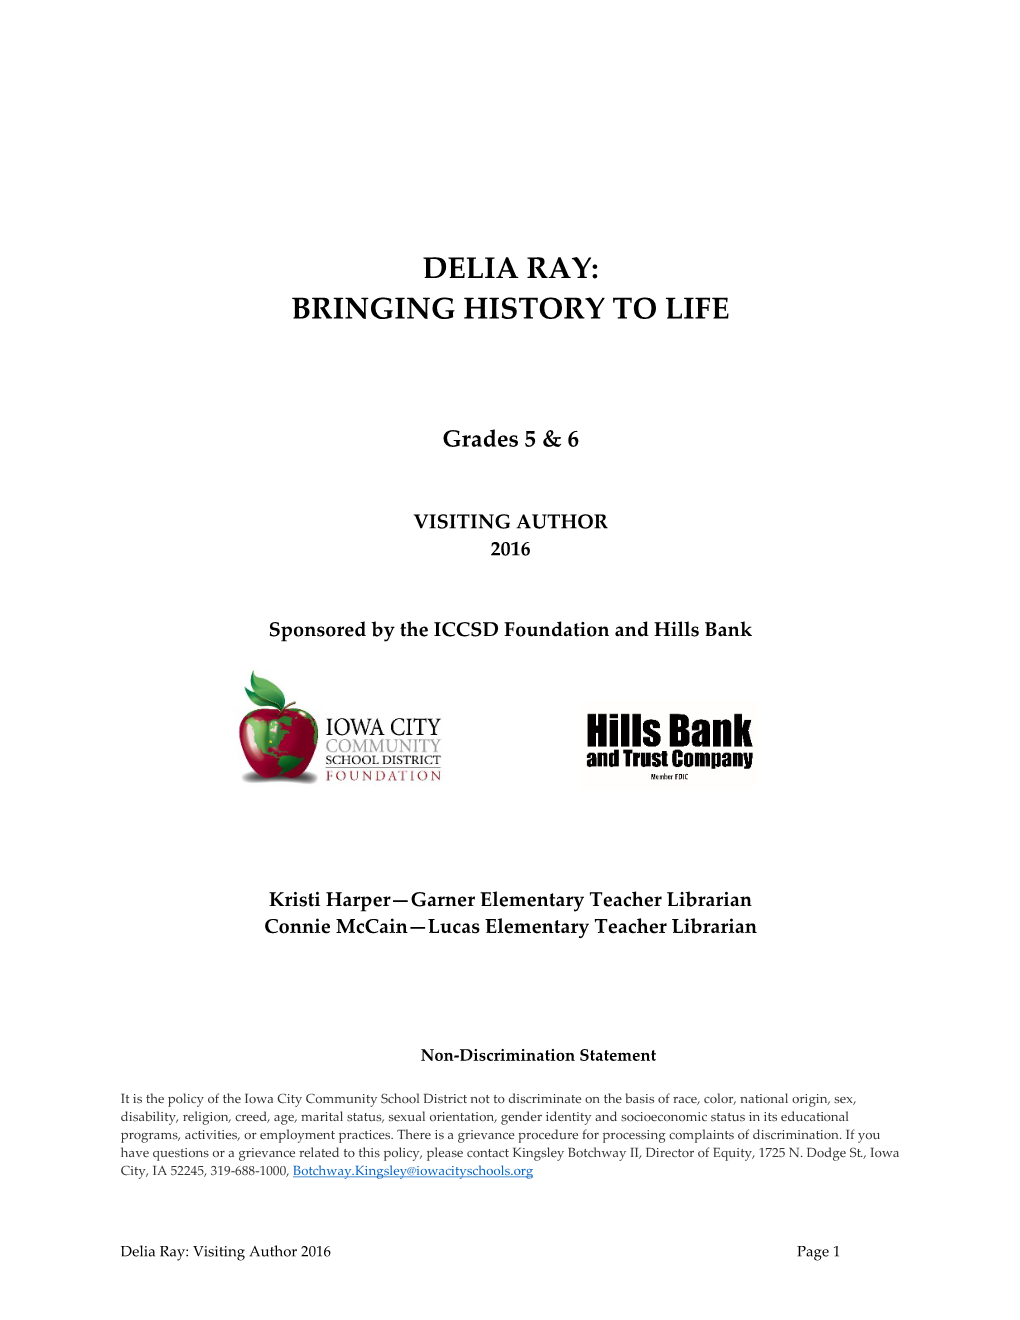 Delia Ray: Bringing History to Life